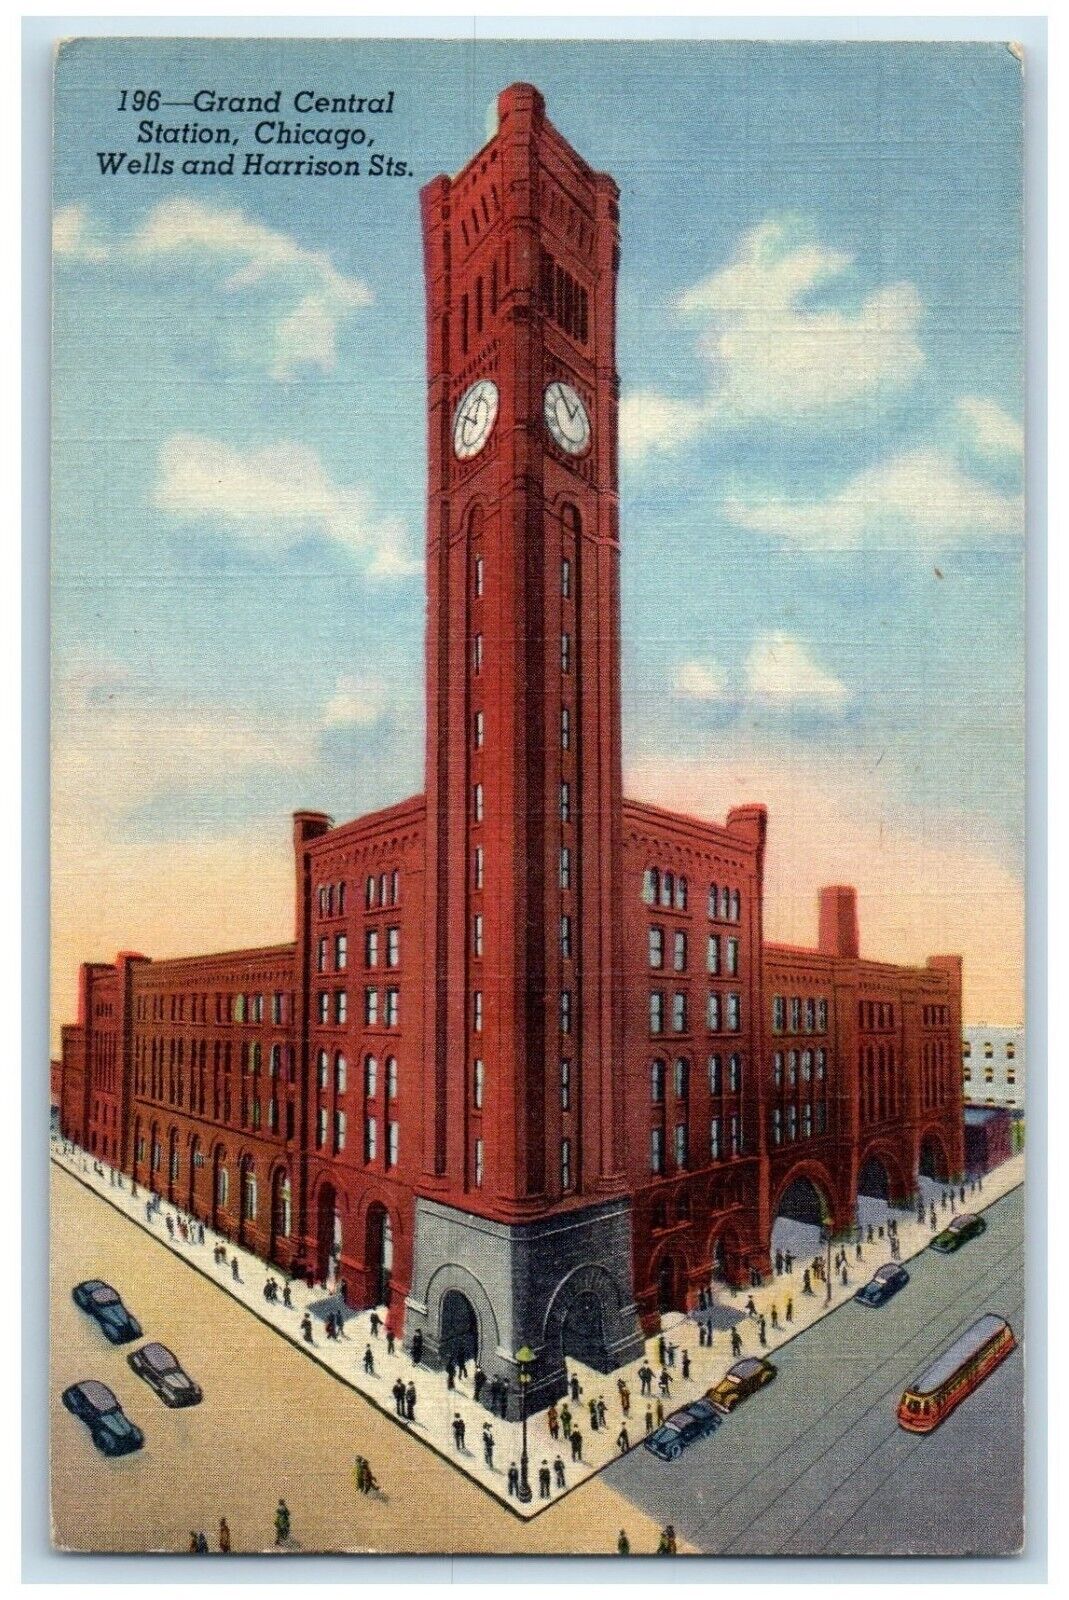 1940 Grand Central Station Chicago Wells Harrison Sts. Illinois Vintage Postcard